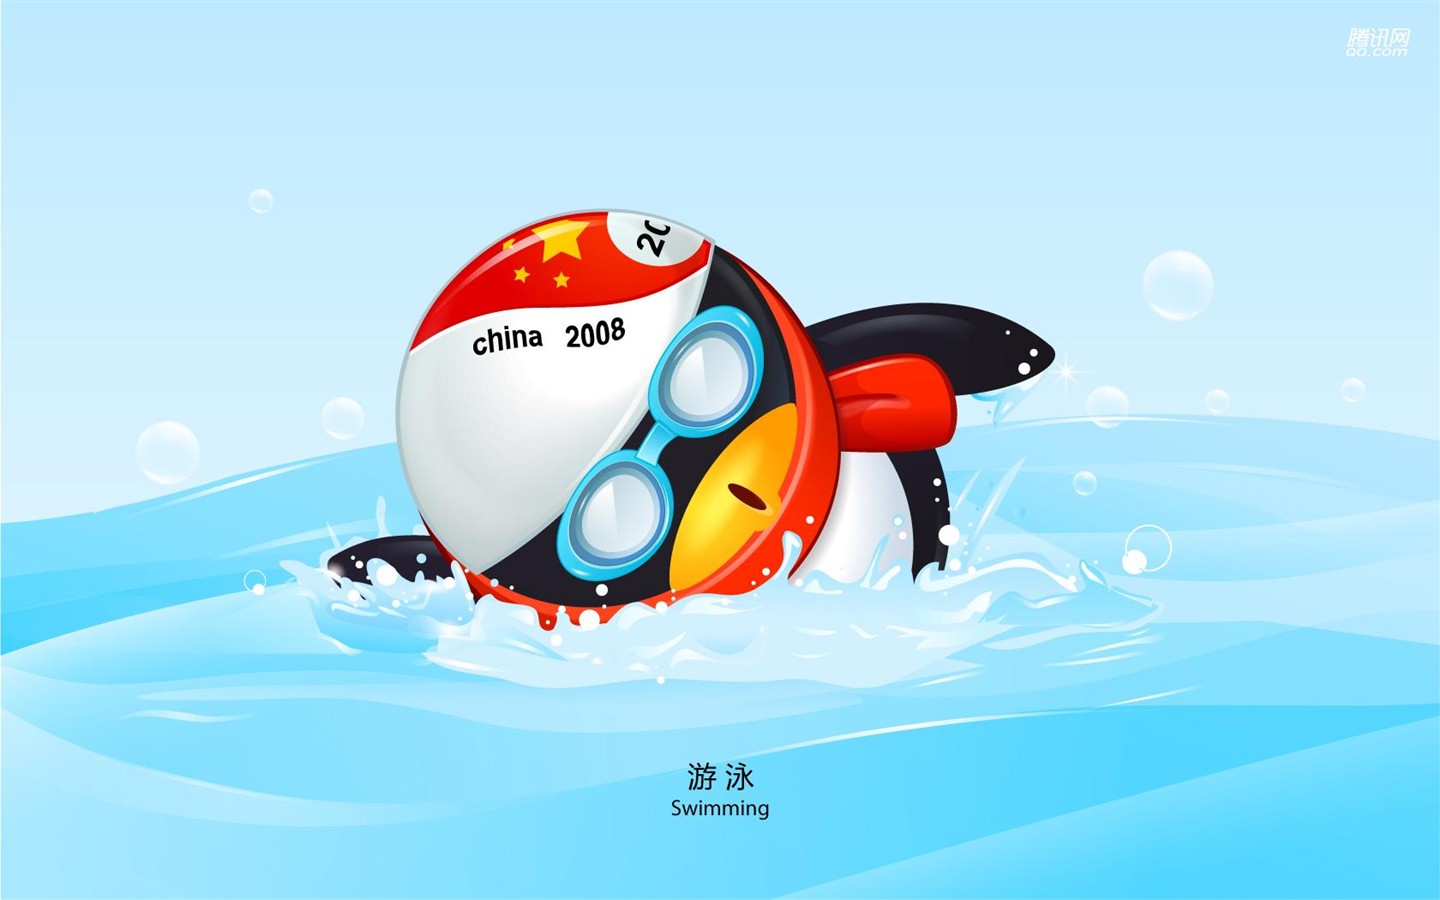 QQ Olympic sports theme wallpaper #9 - 1440x900